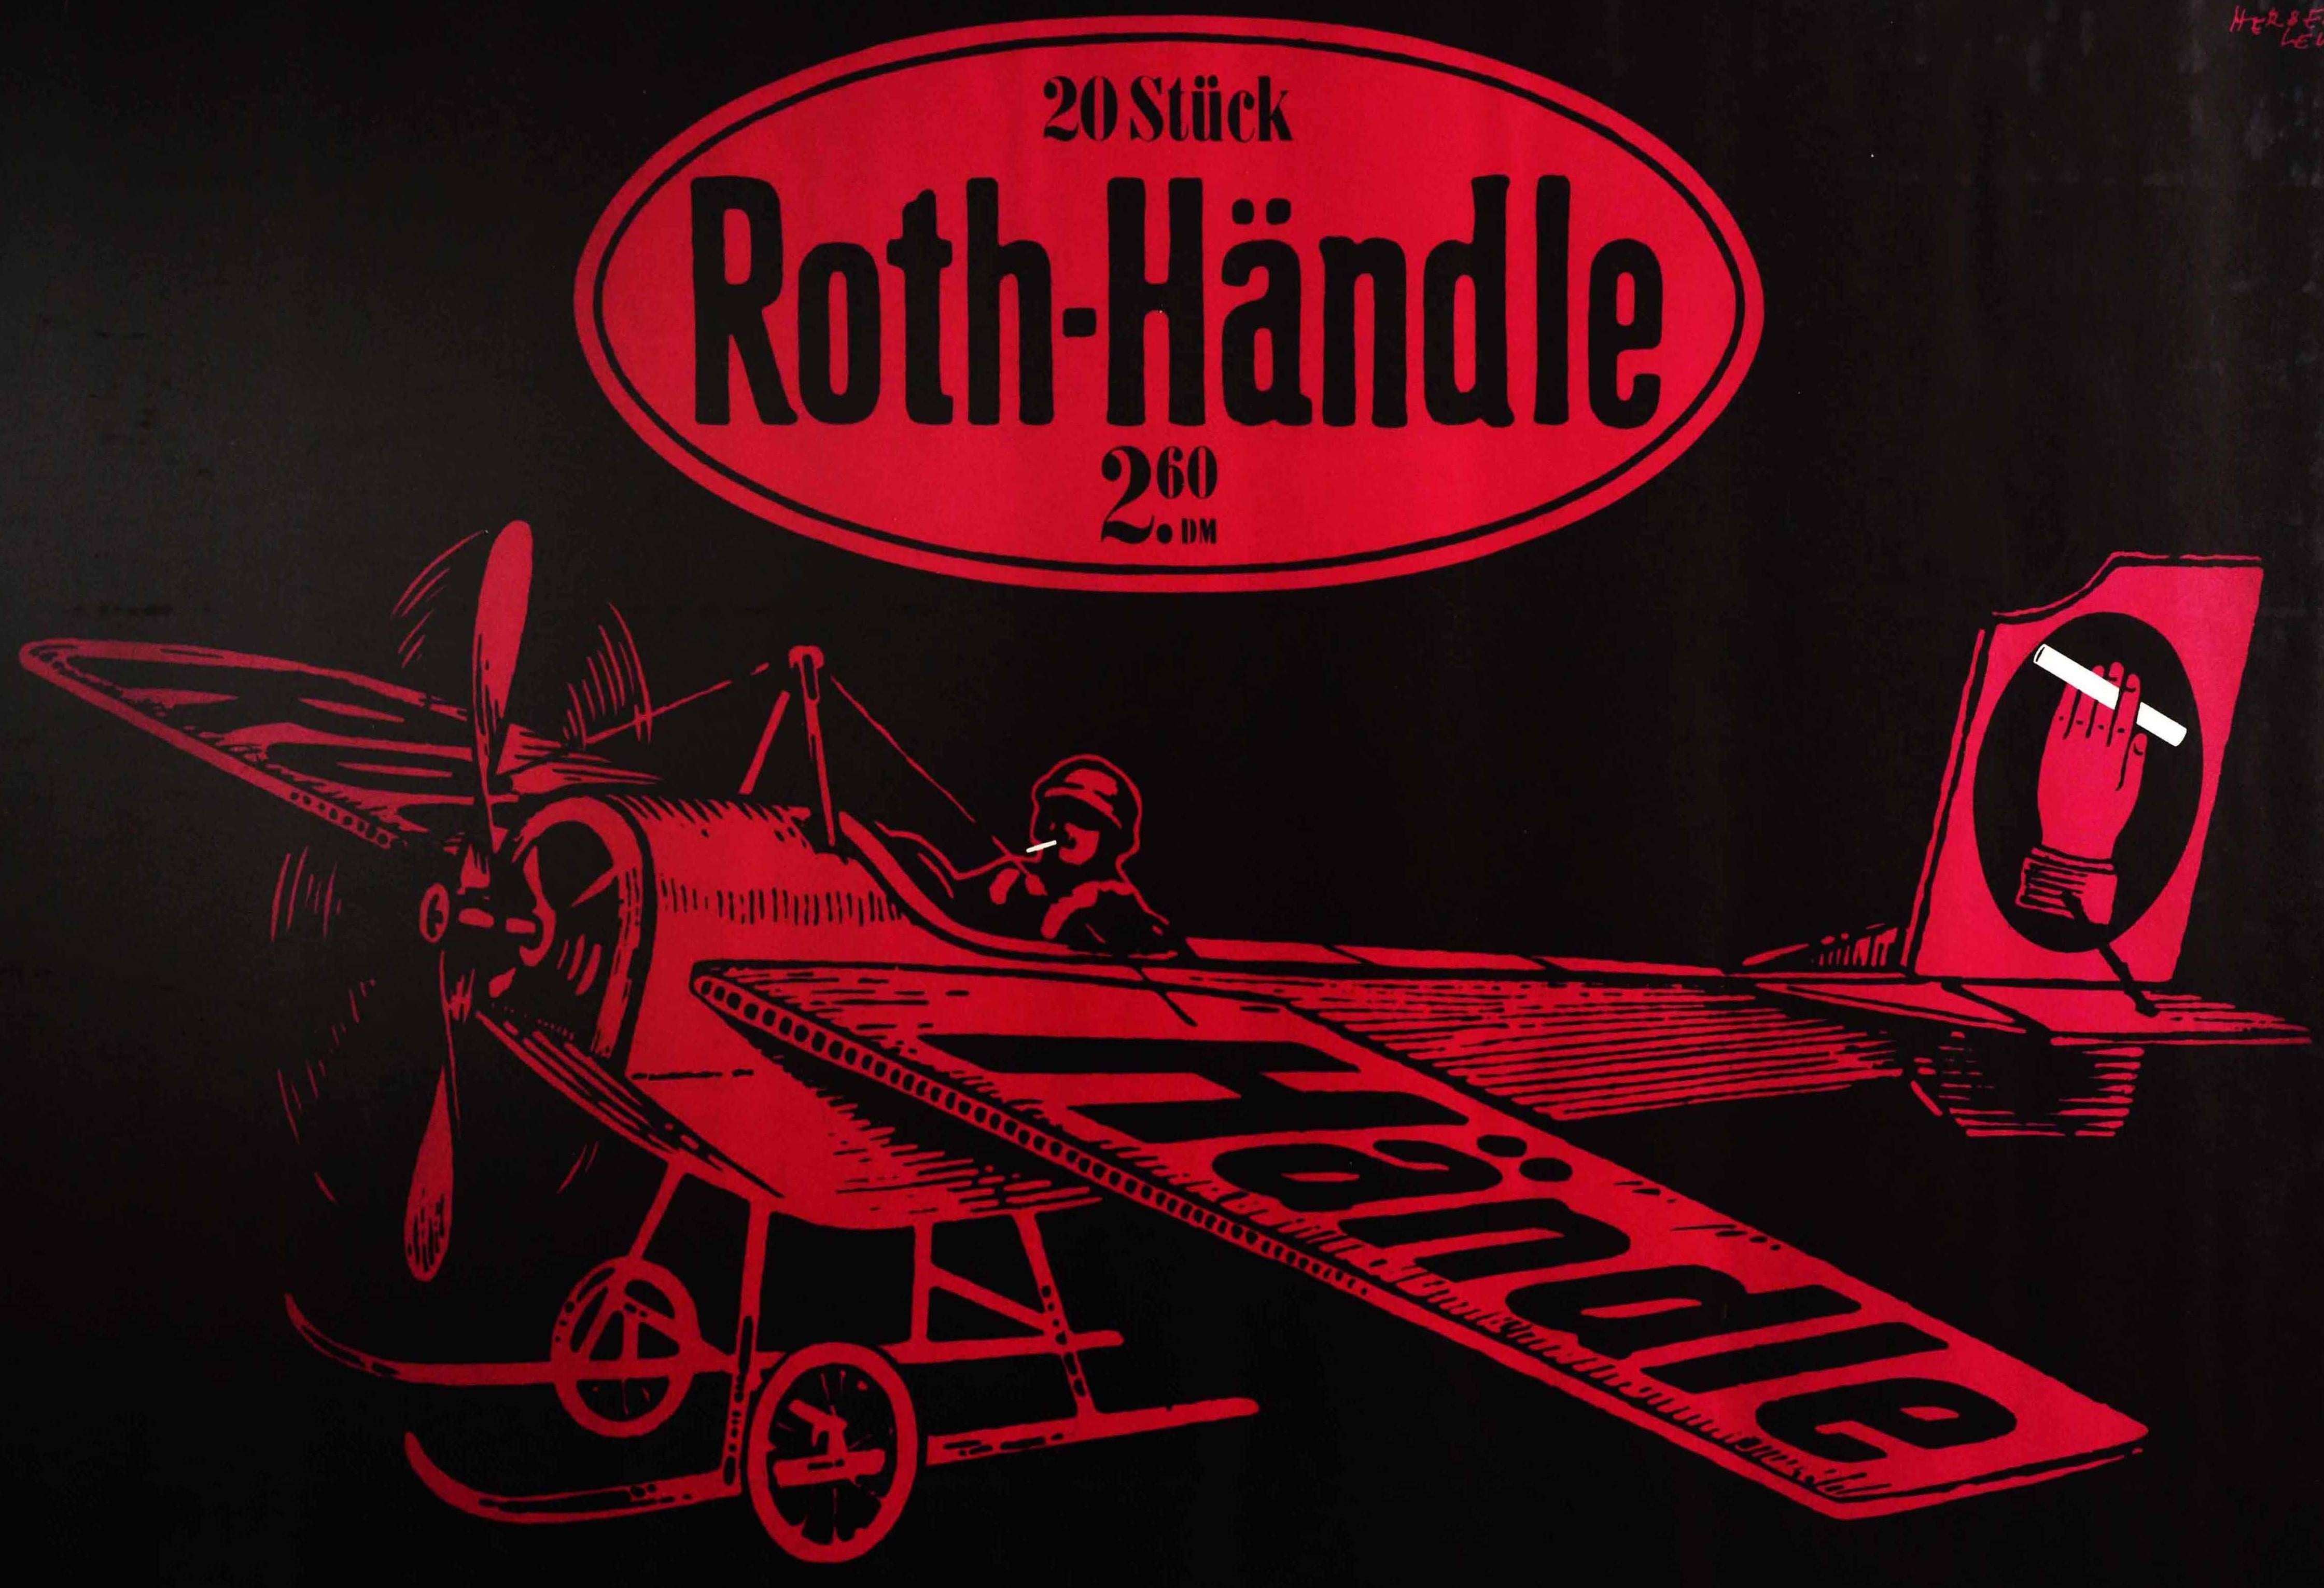 Original Vintage Poster Roth Handle Tobacco Cigarettes Smoking Ad Plane Design - Print by Herbert Leupin